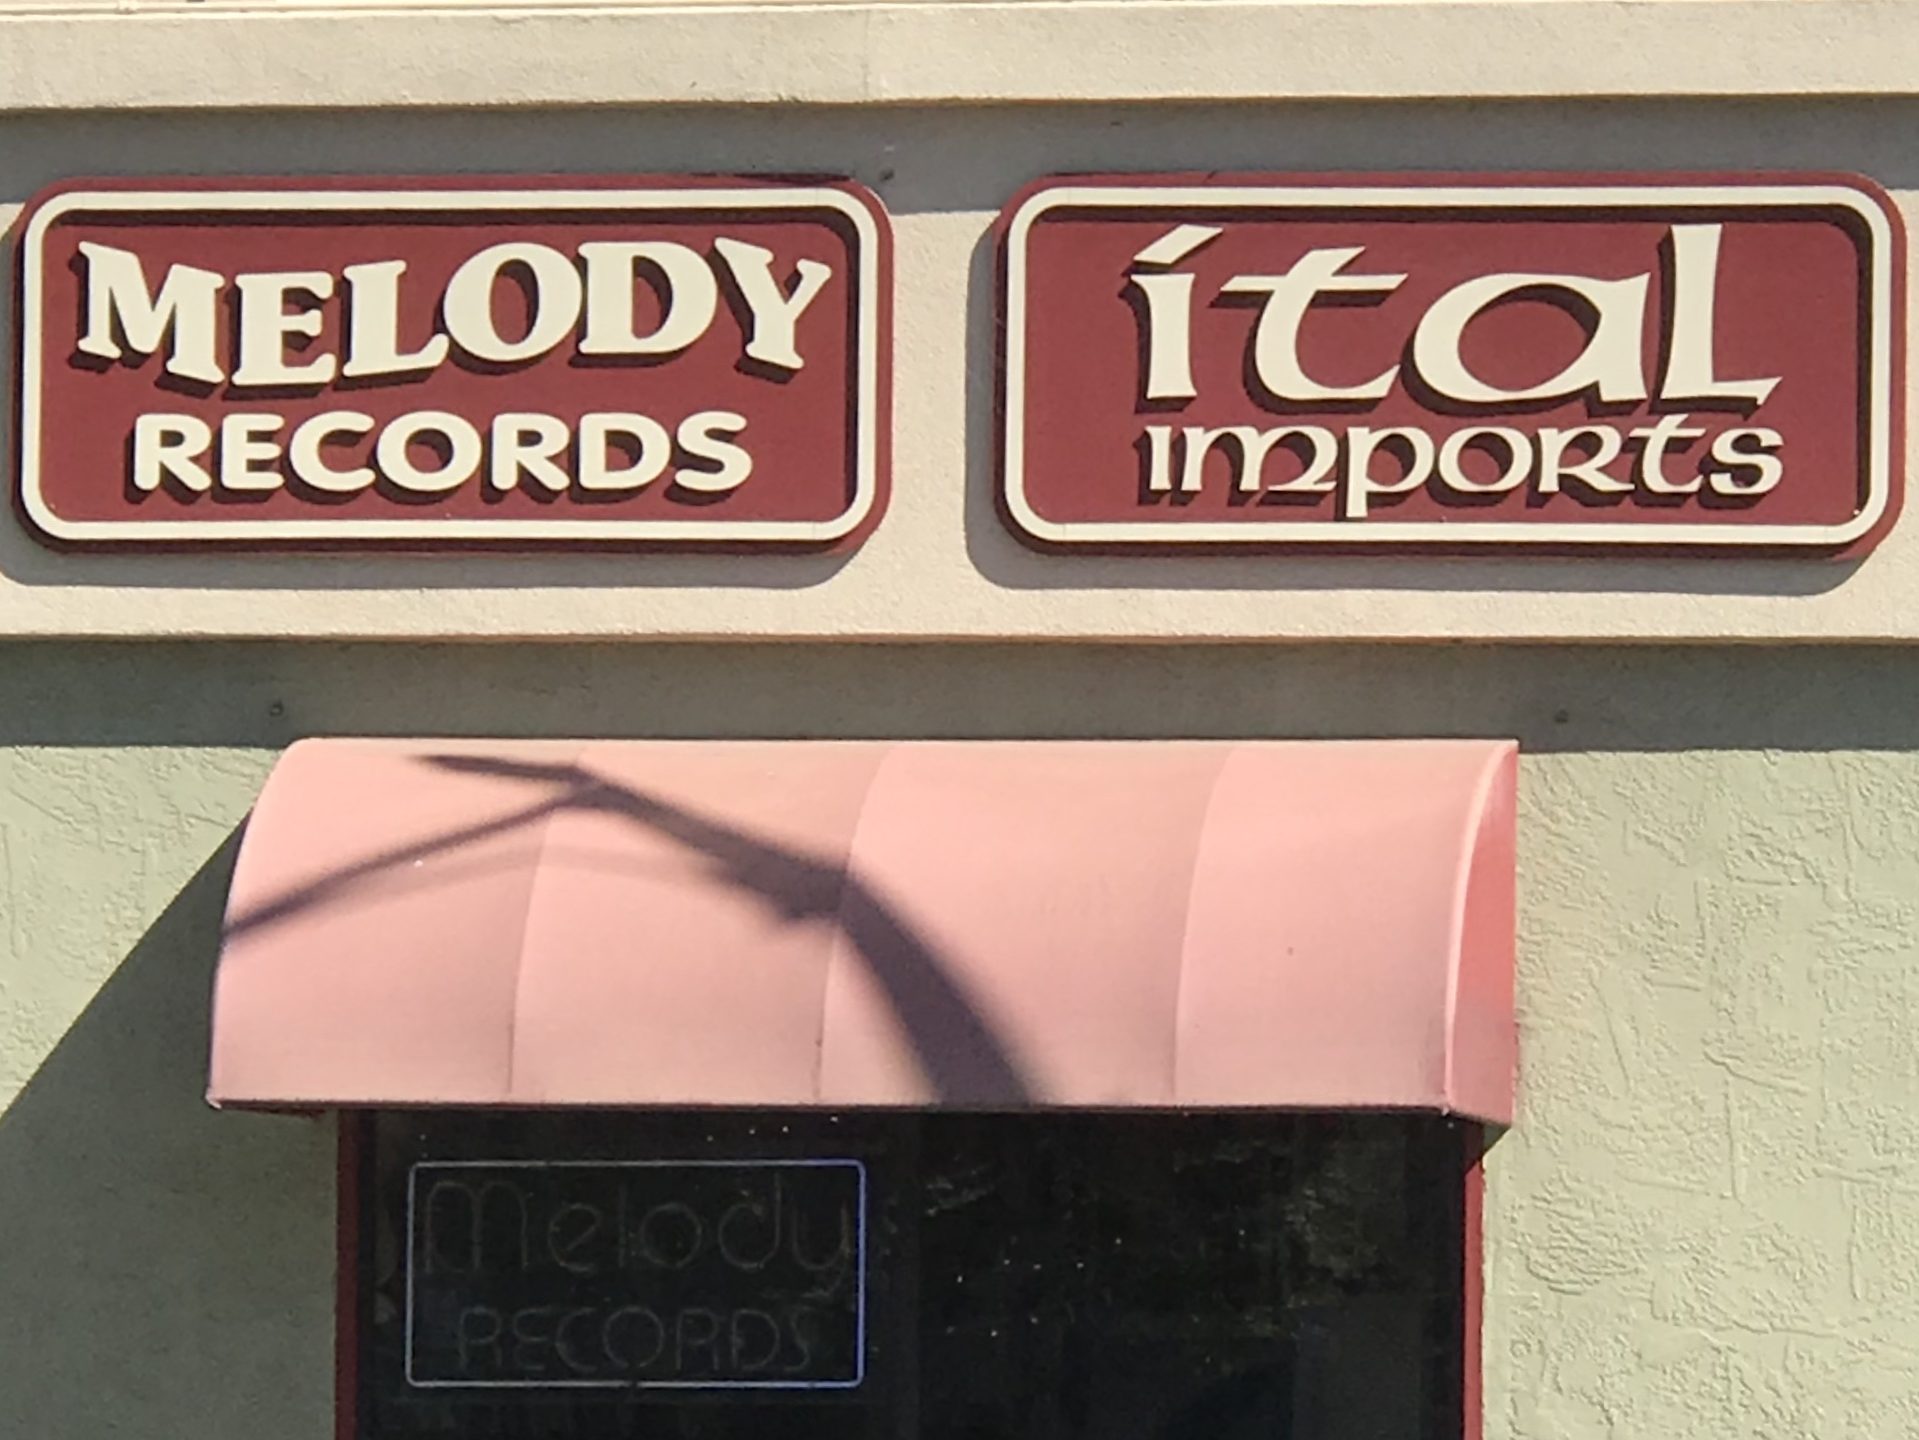 Melody Record & Ital Imports